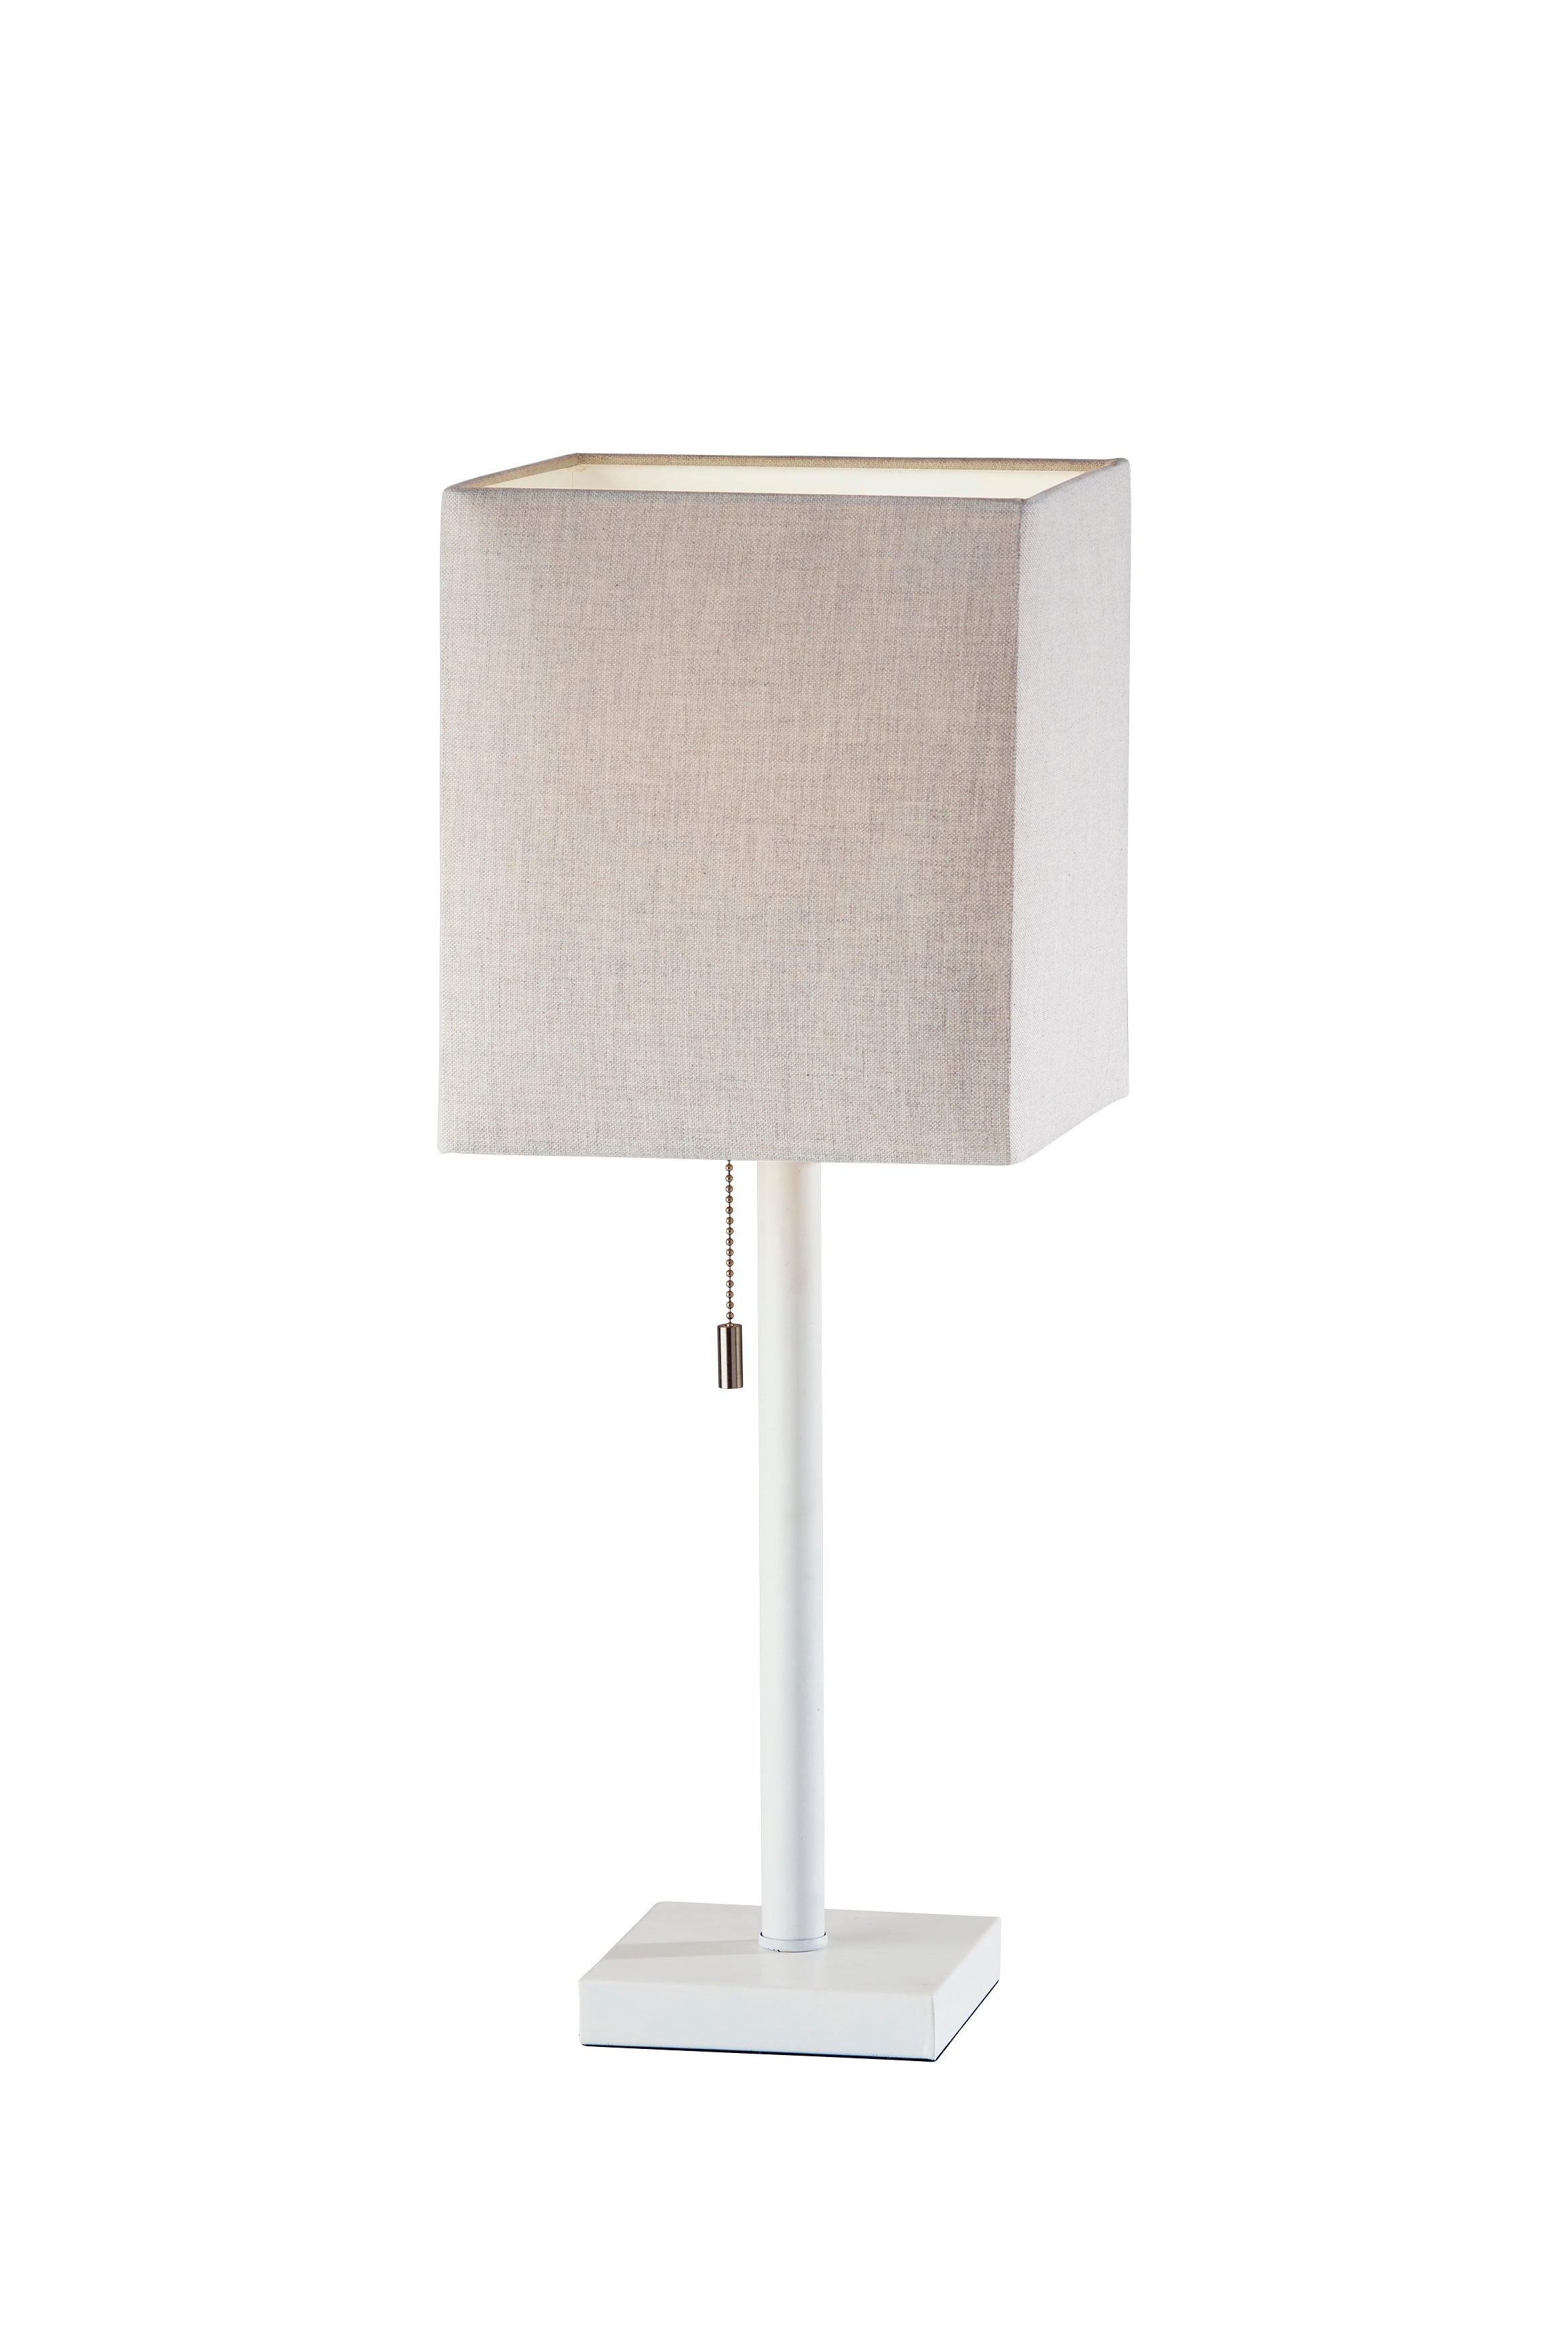 ESTELLE Table lamp White - 1566-02 | ADESSO